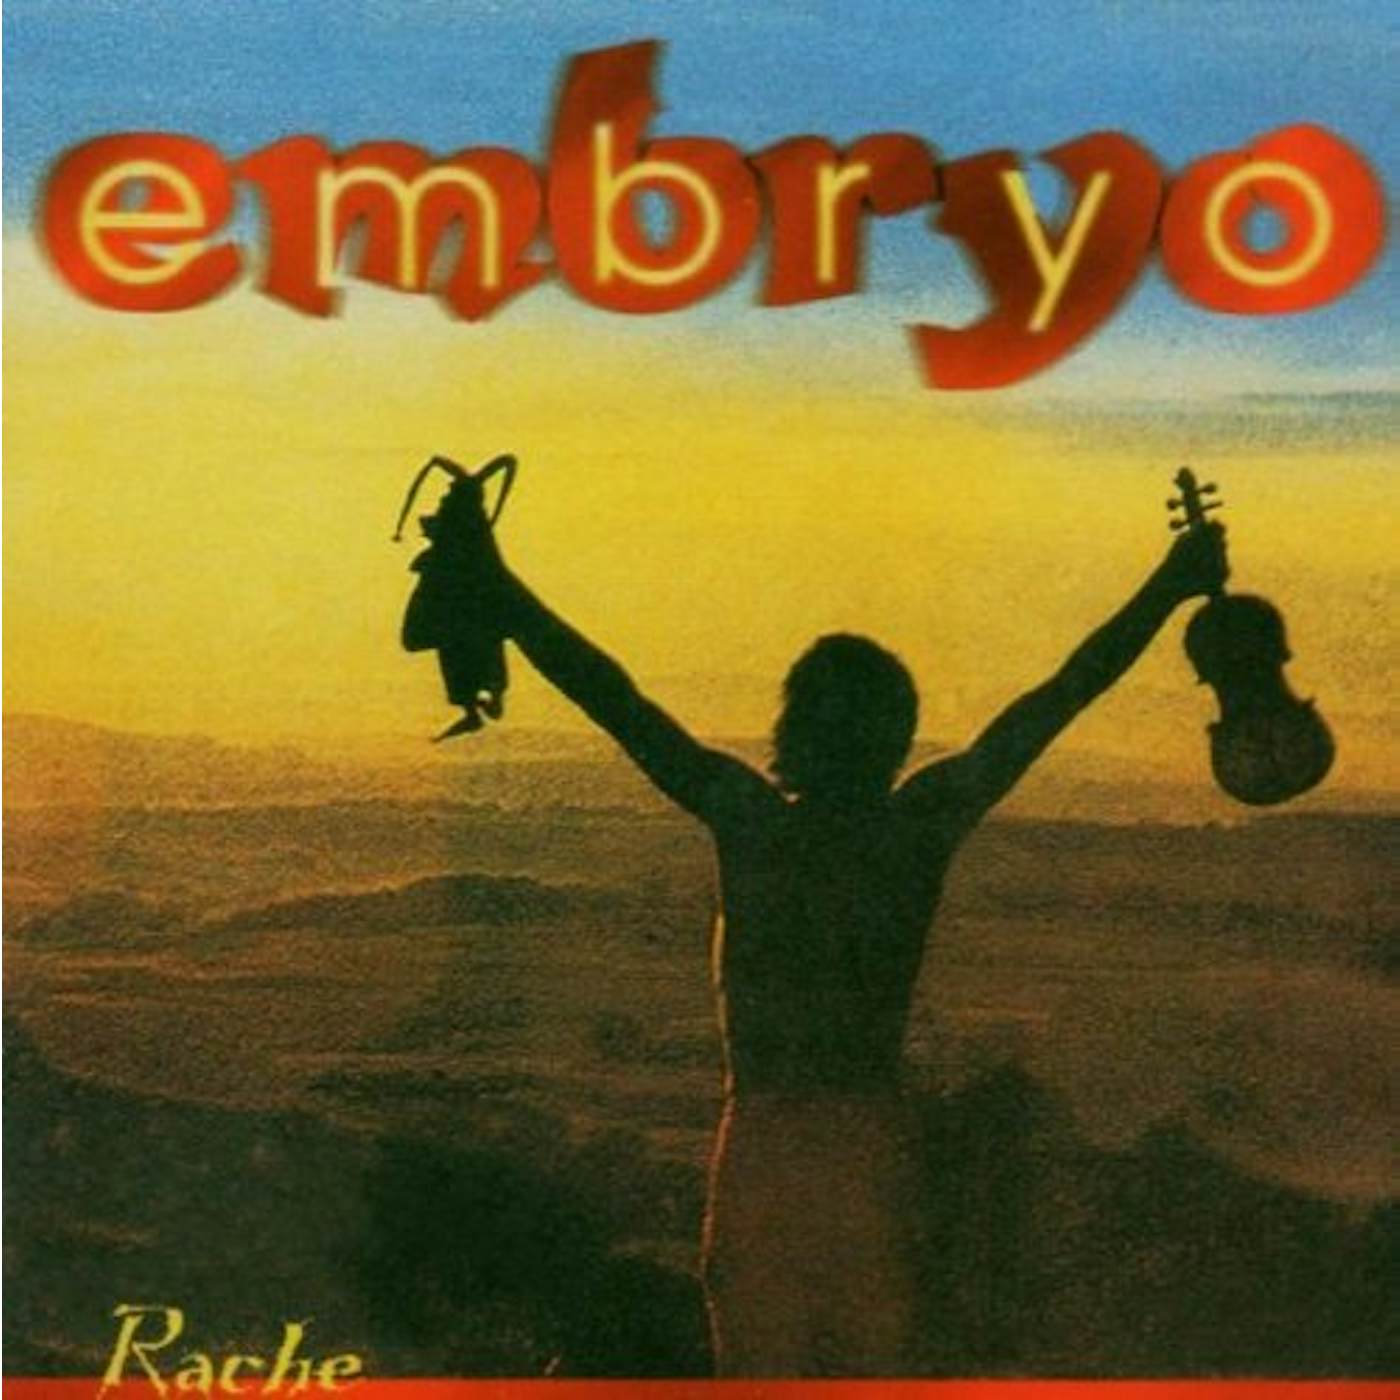 EMBRYO'S RACHE CD